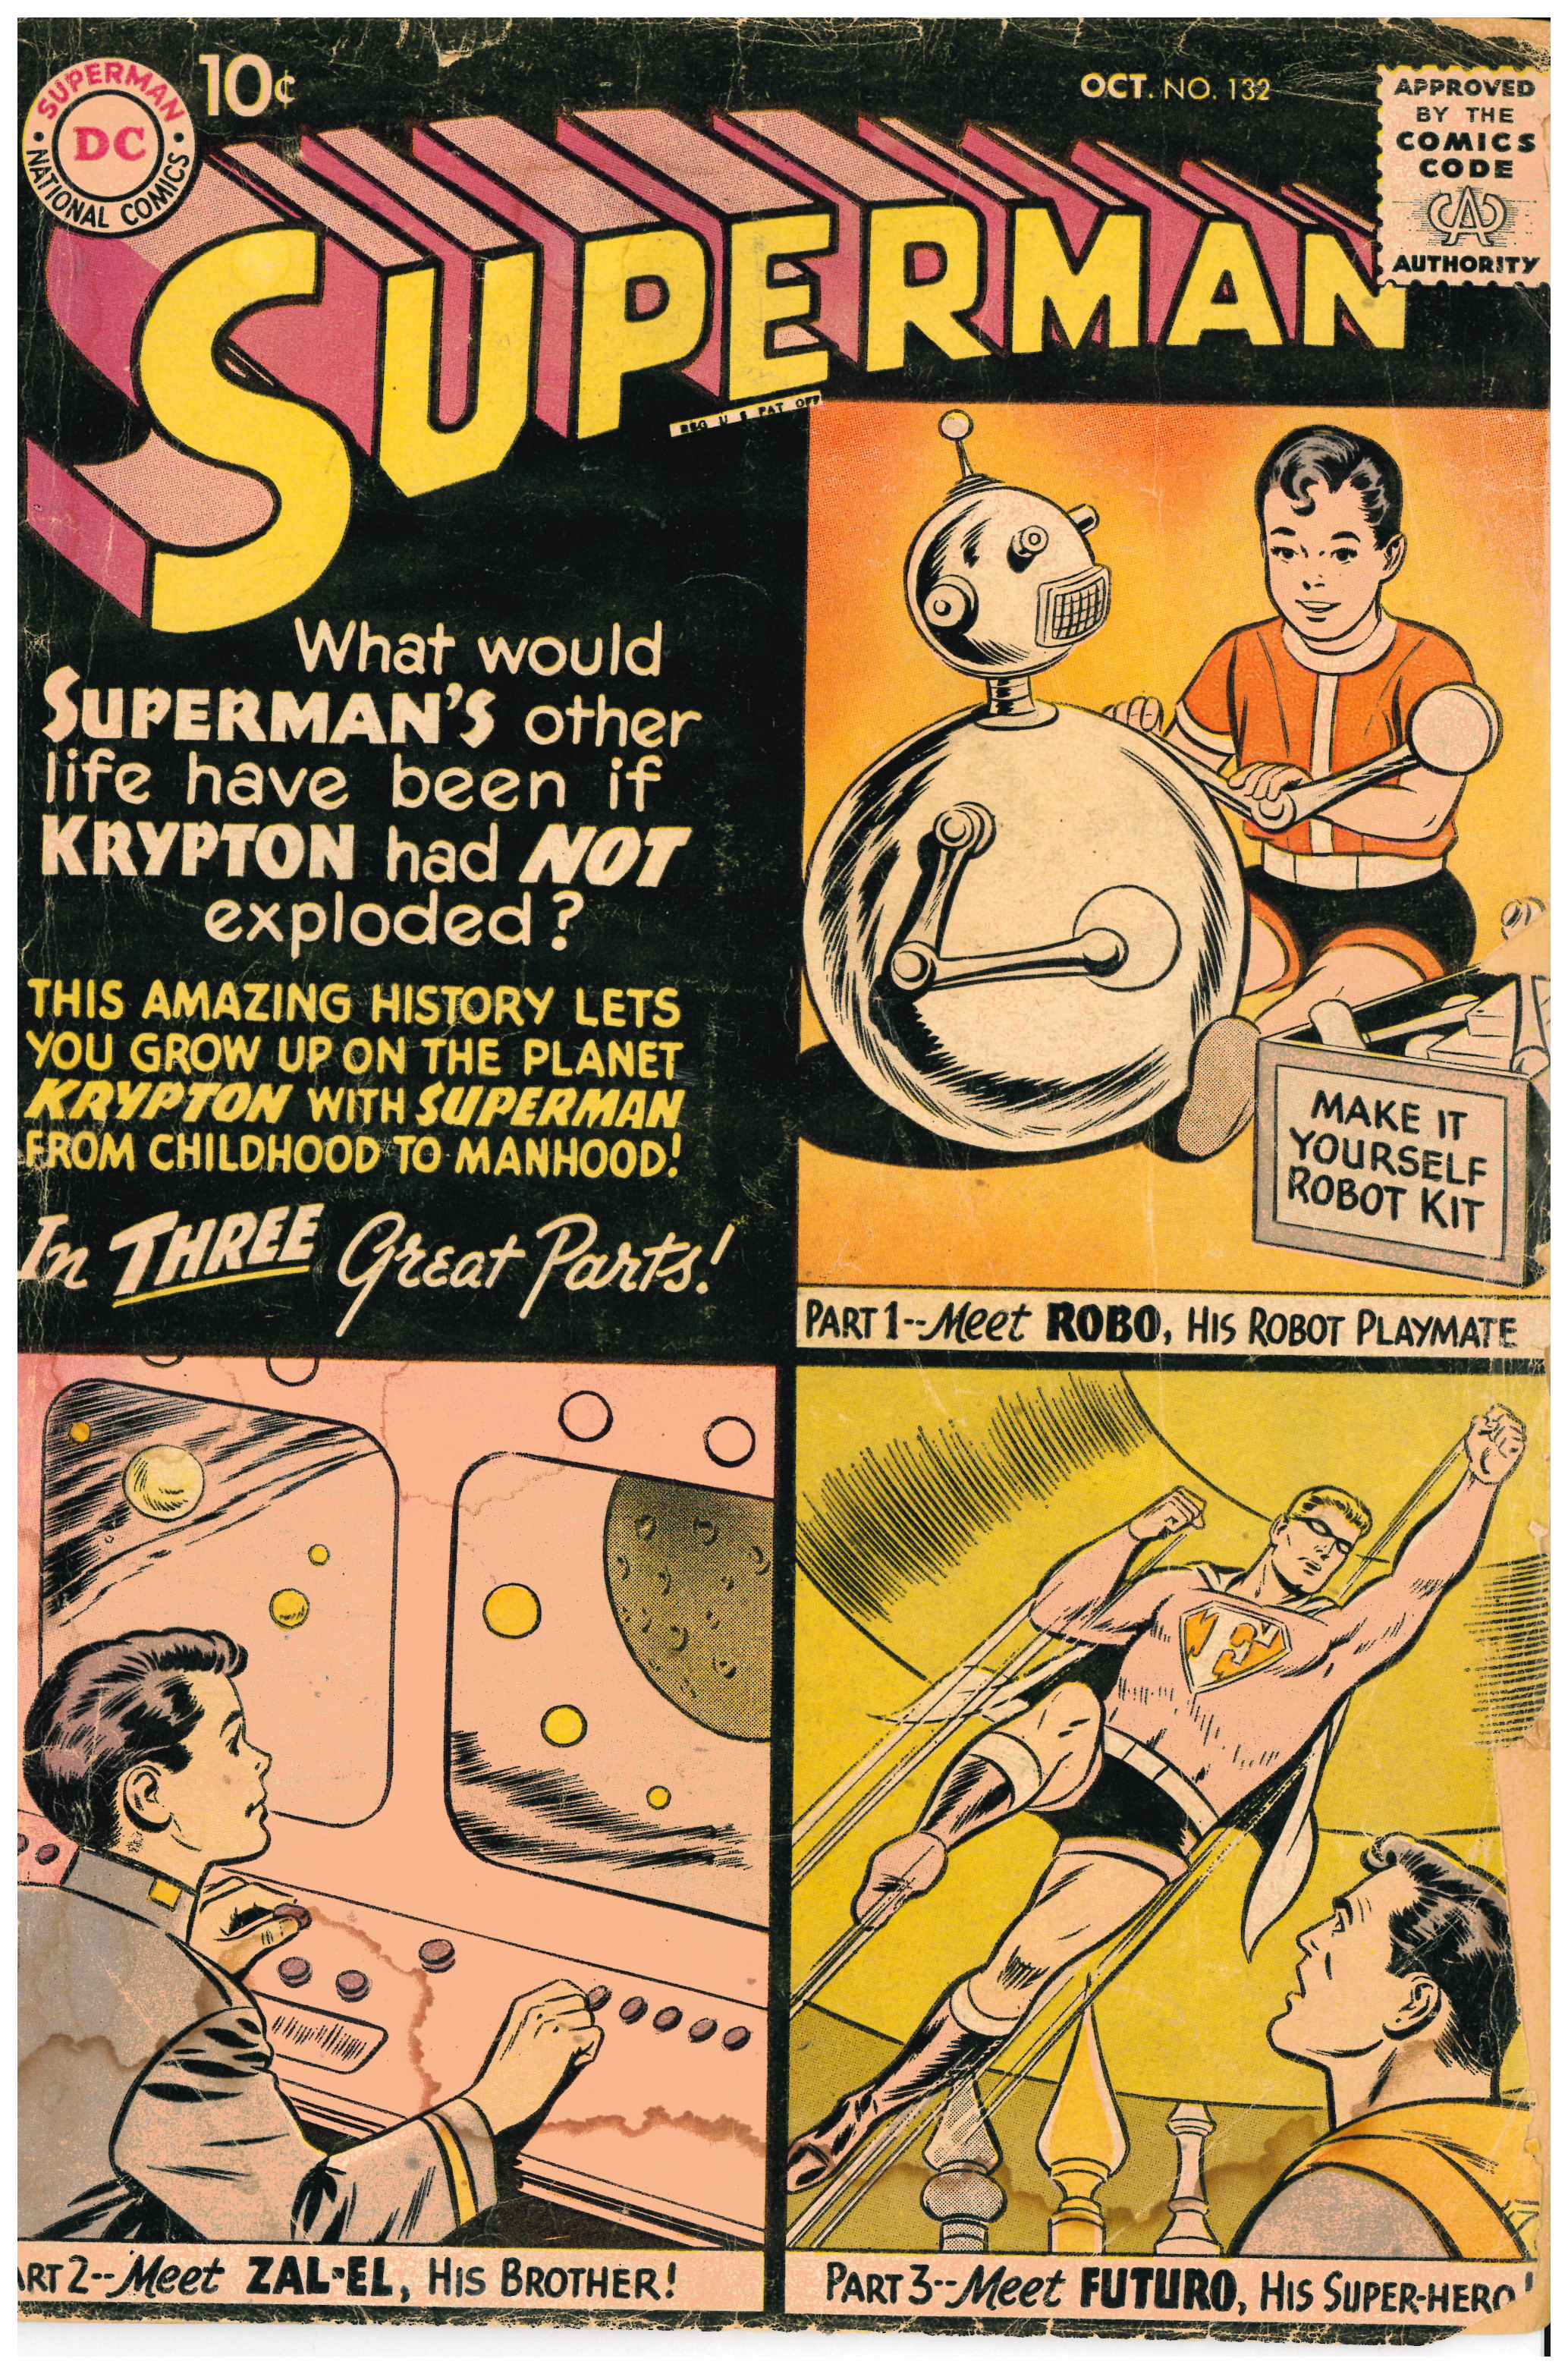 Superman #132